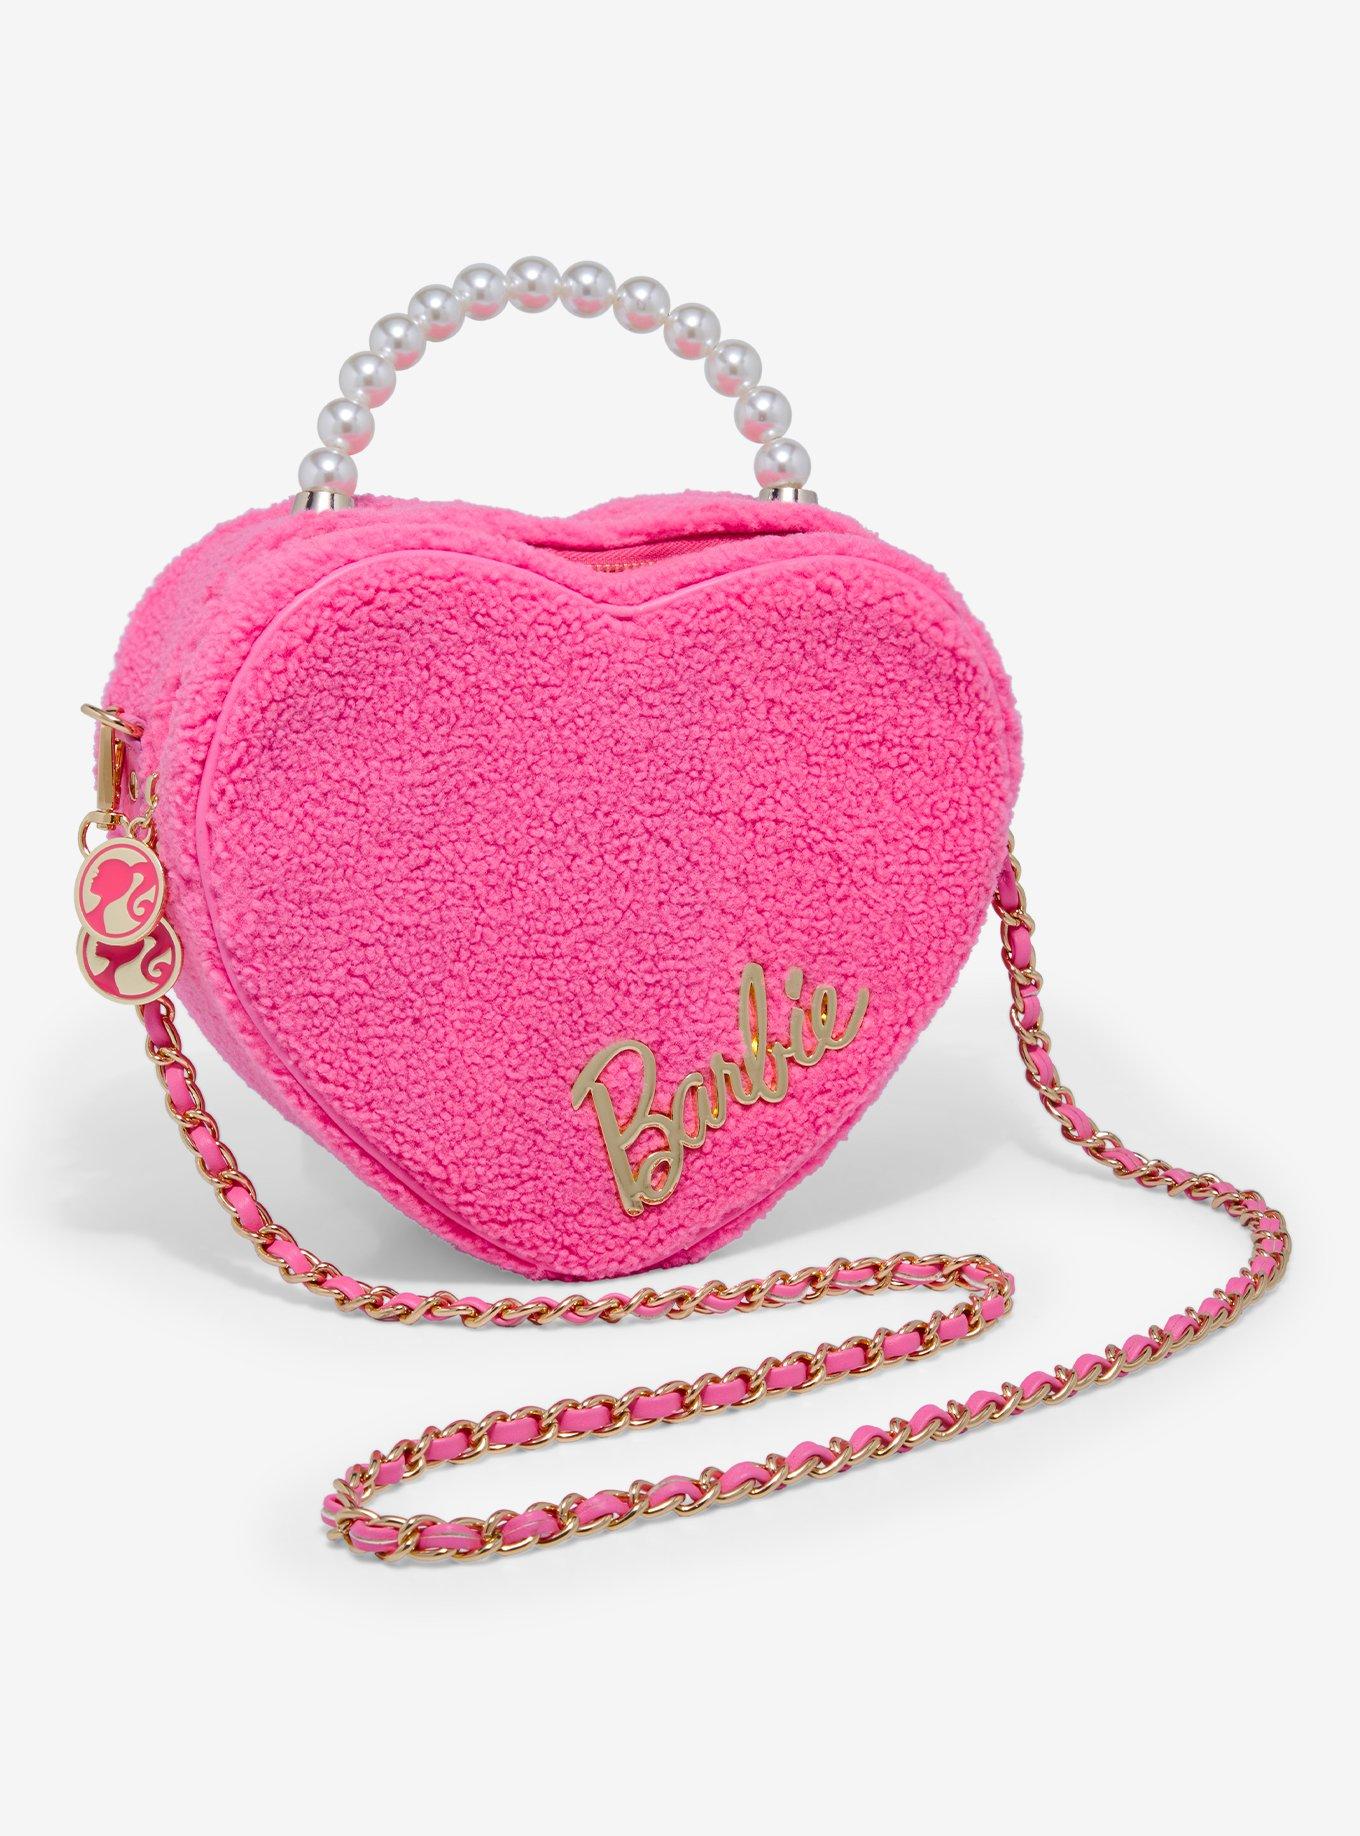 New Bag alert ✨😍 I found this cute little crossbody bag that